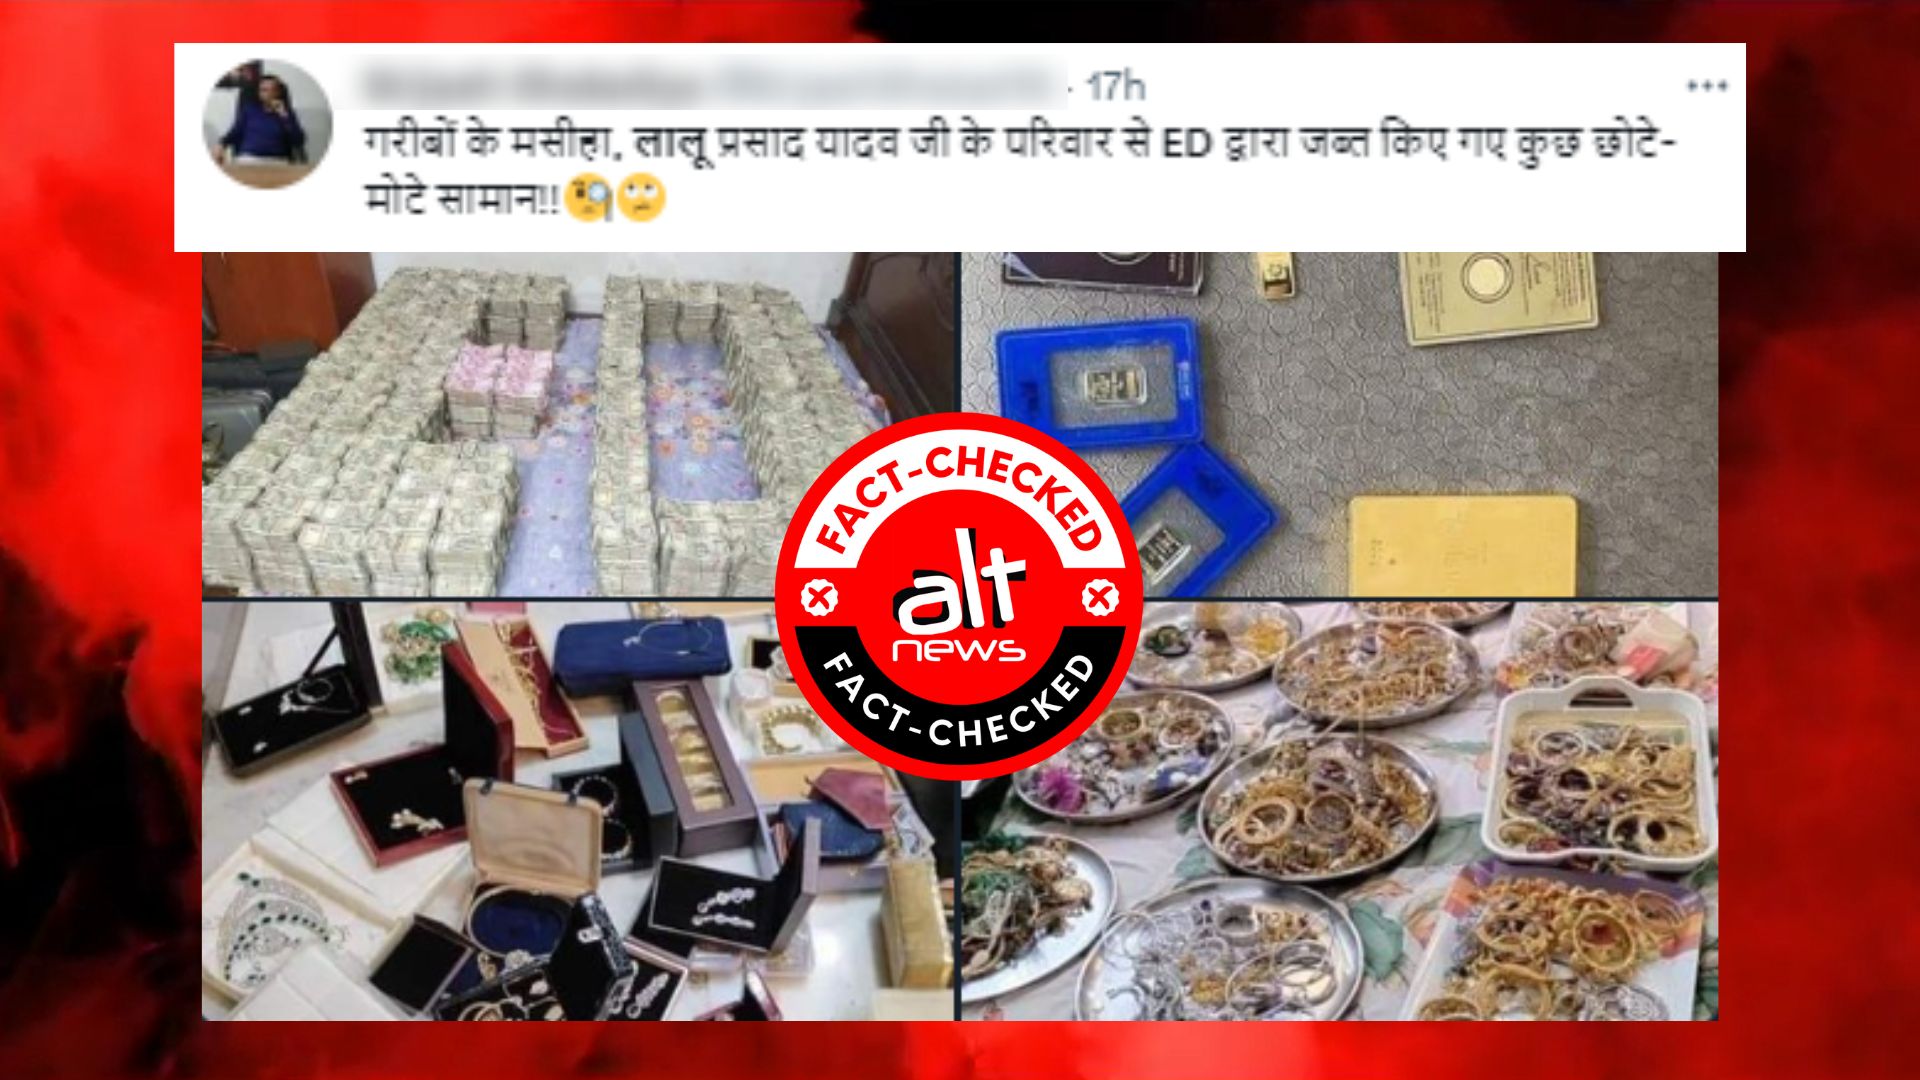 ED raid on Lalu Yadav-linked premises: Old, unrelated photos shared as seized articles - Alt News